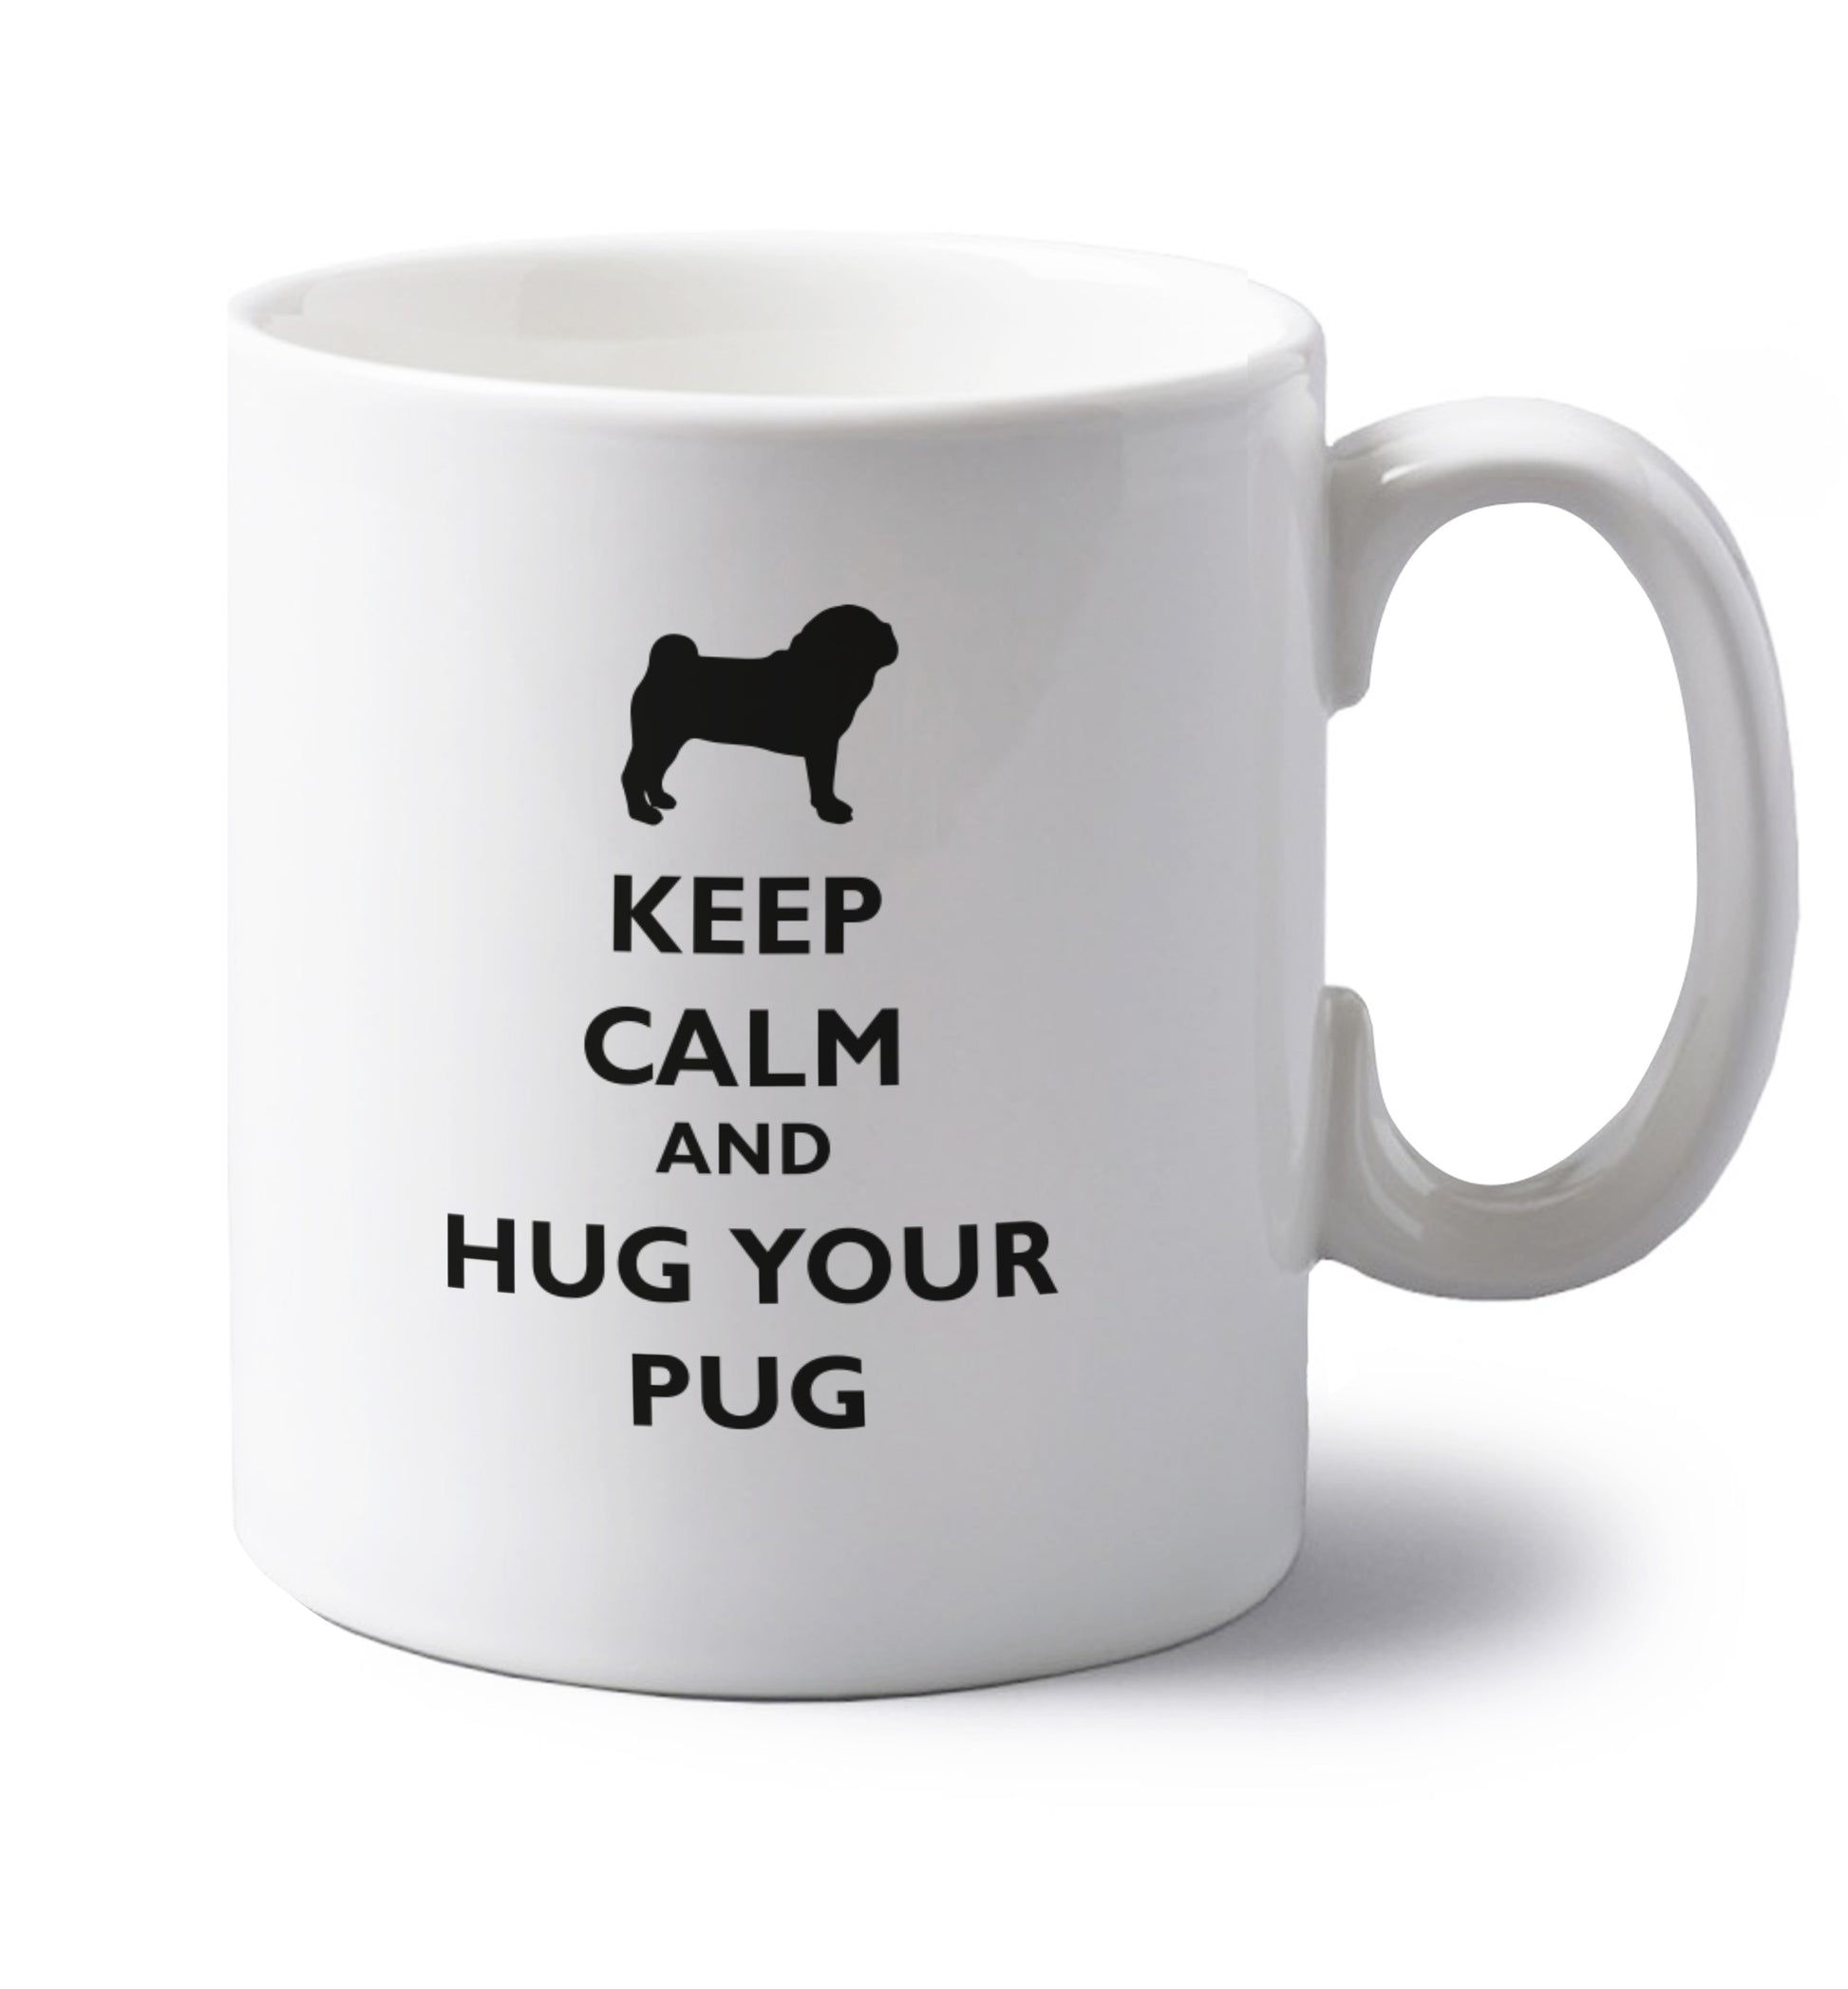 Keep calm and hug your pug left handed white ceramic mug 